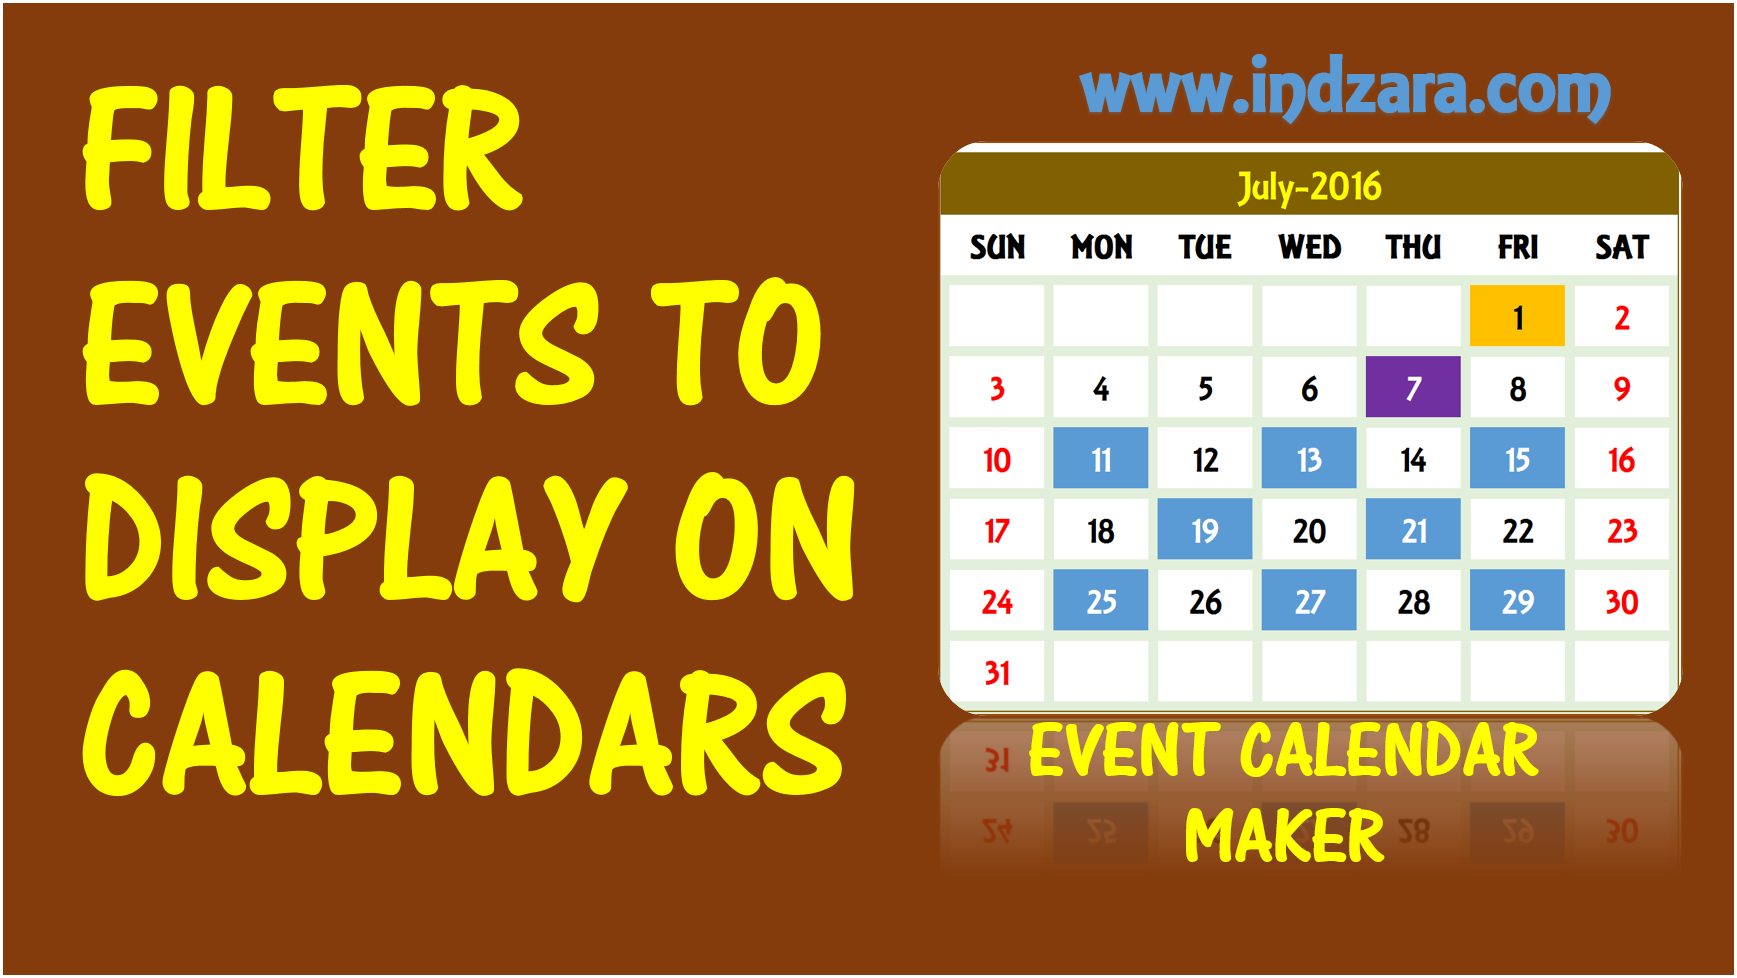 Event Calendar Maker - Excel Template - Filter Events